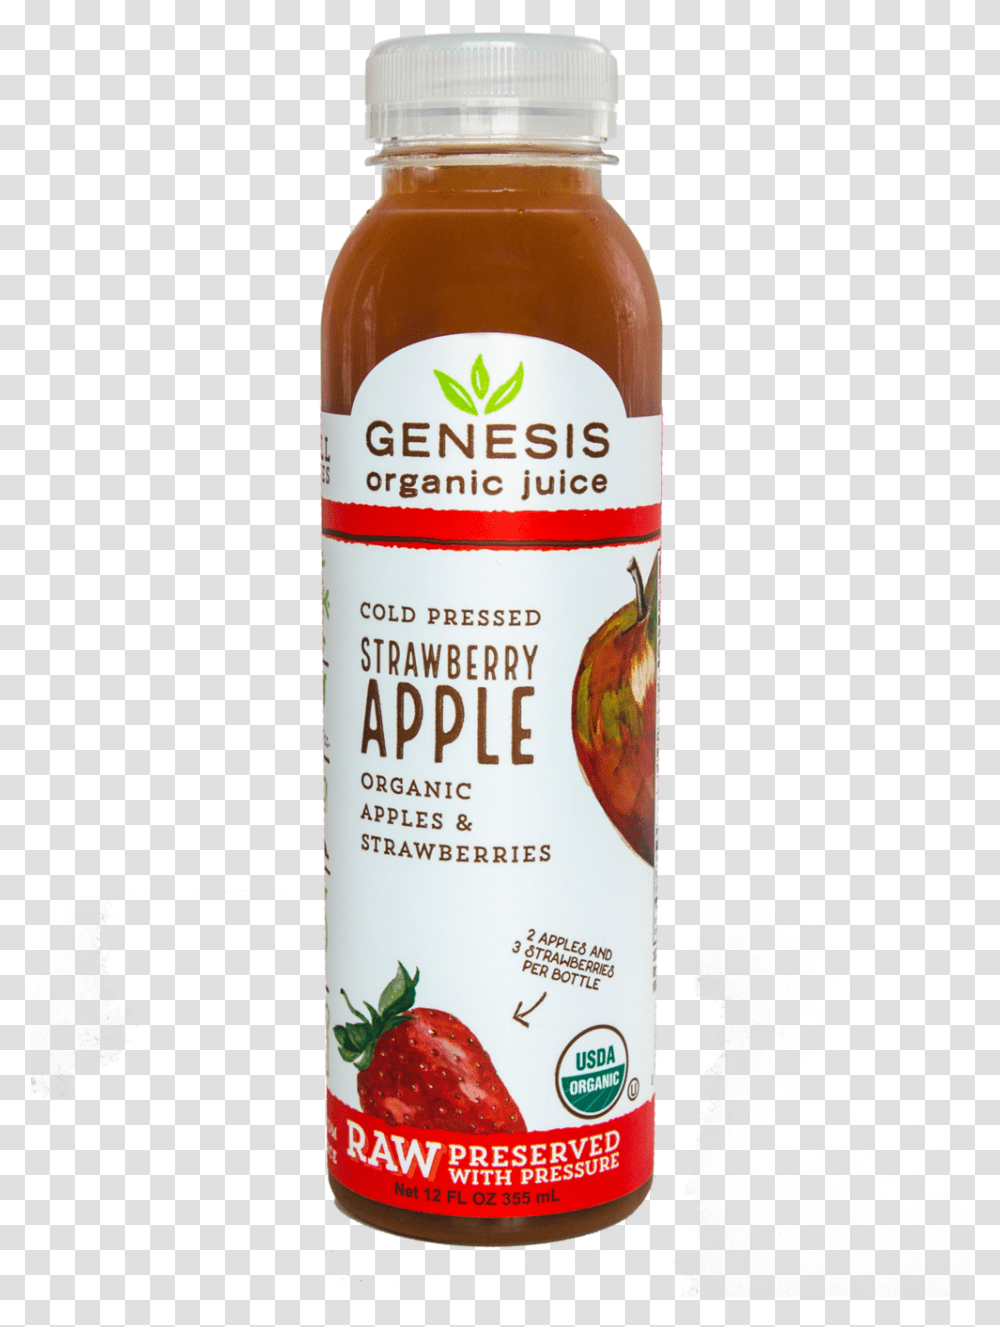 Strawberryapple Genesis Organic Apple Juice, Ketchup, Food, Bottle, Label Transparent Png